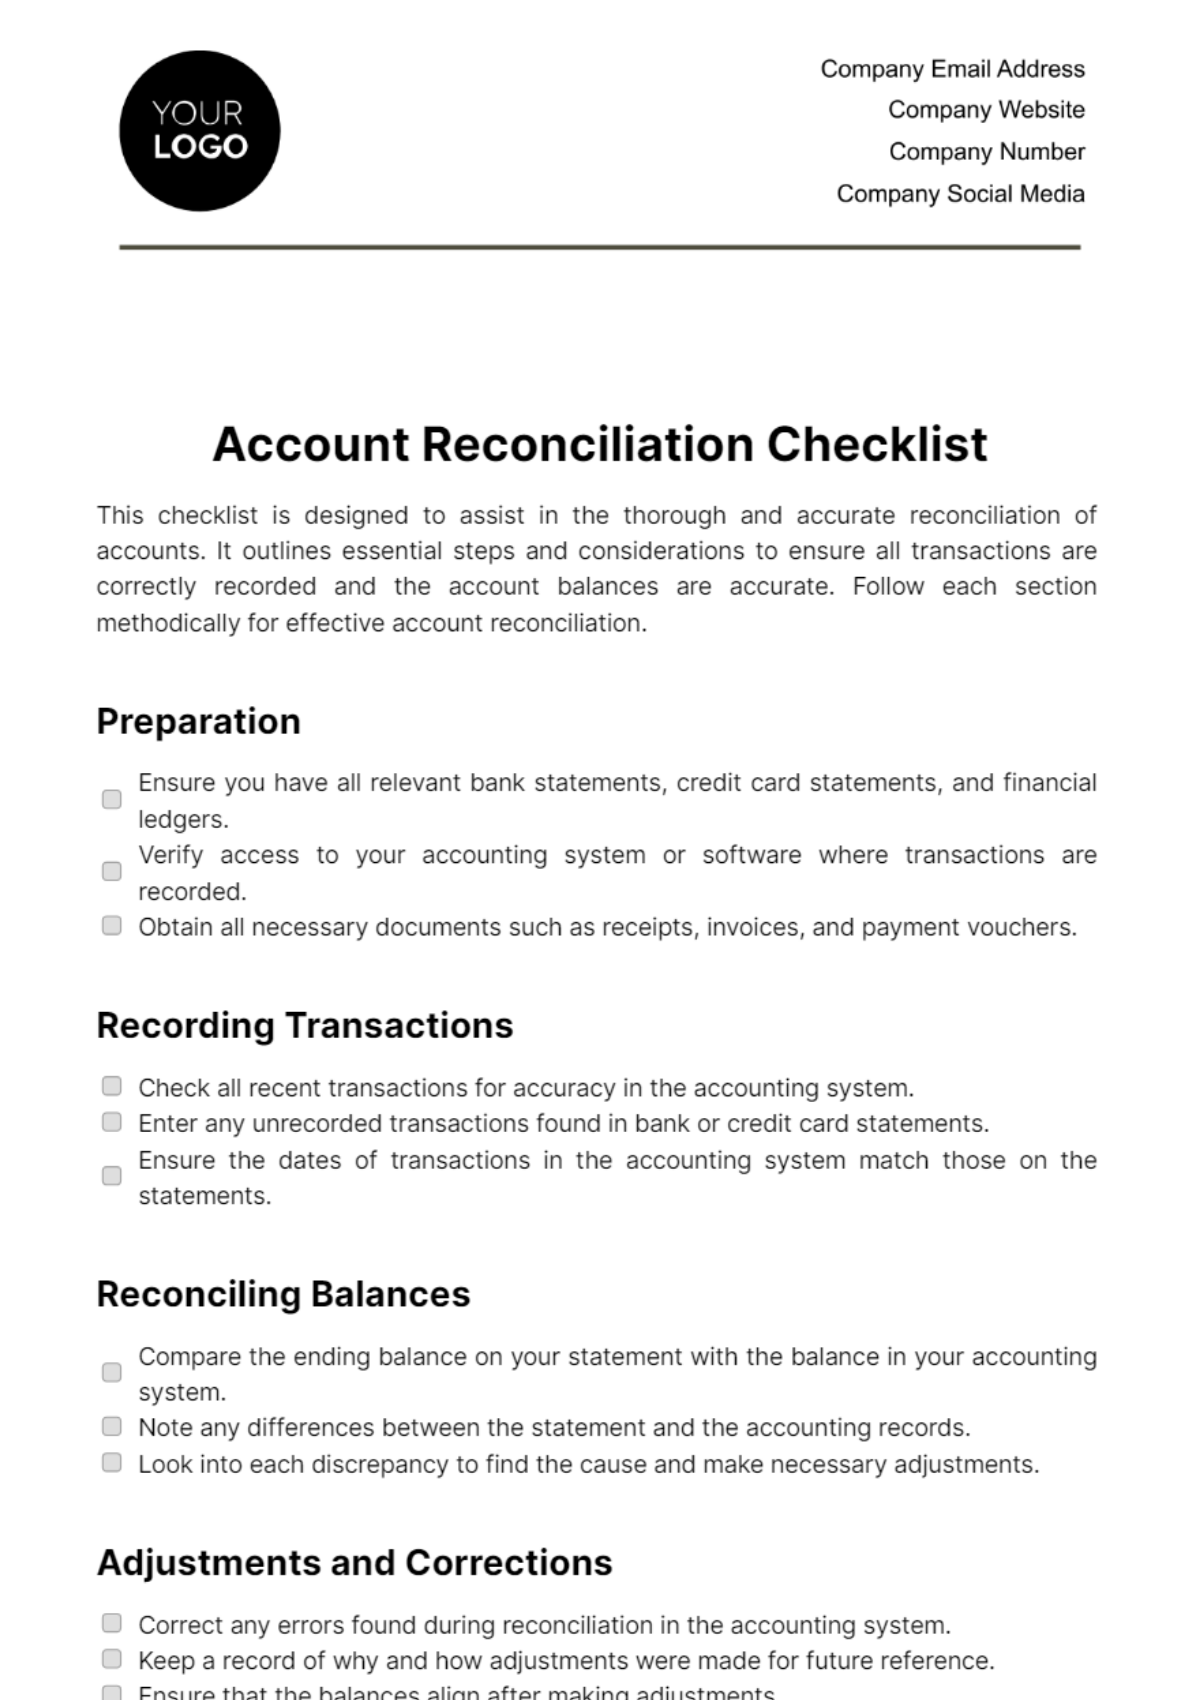 Free Account Reconciliation Checklist Template